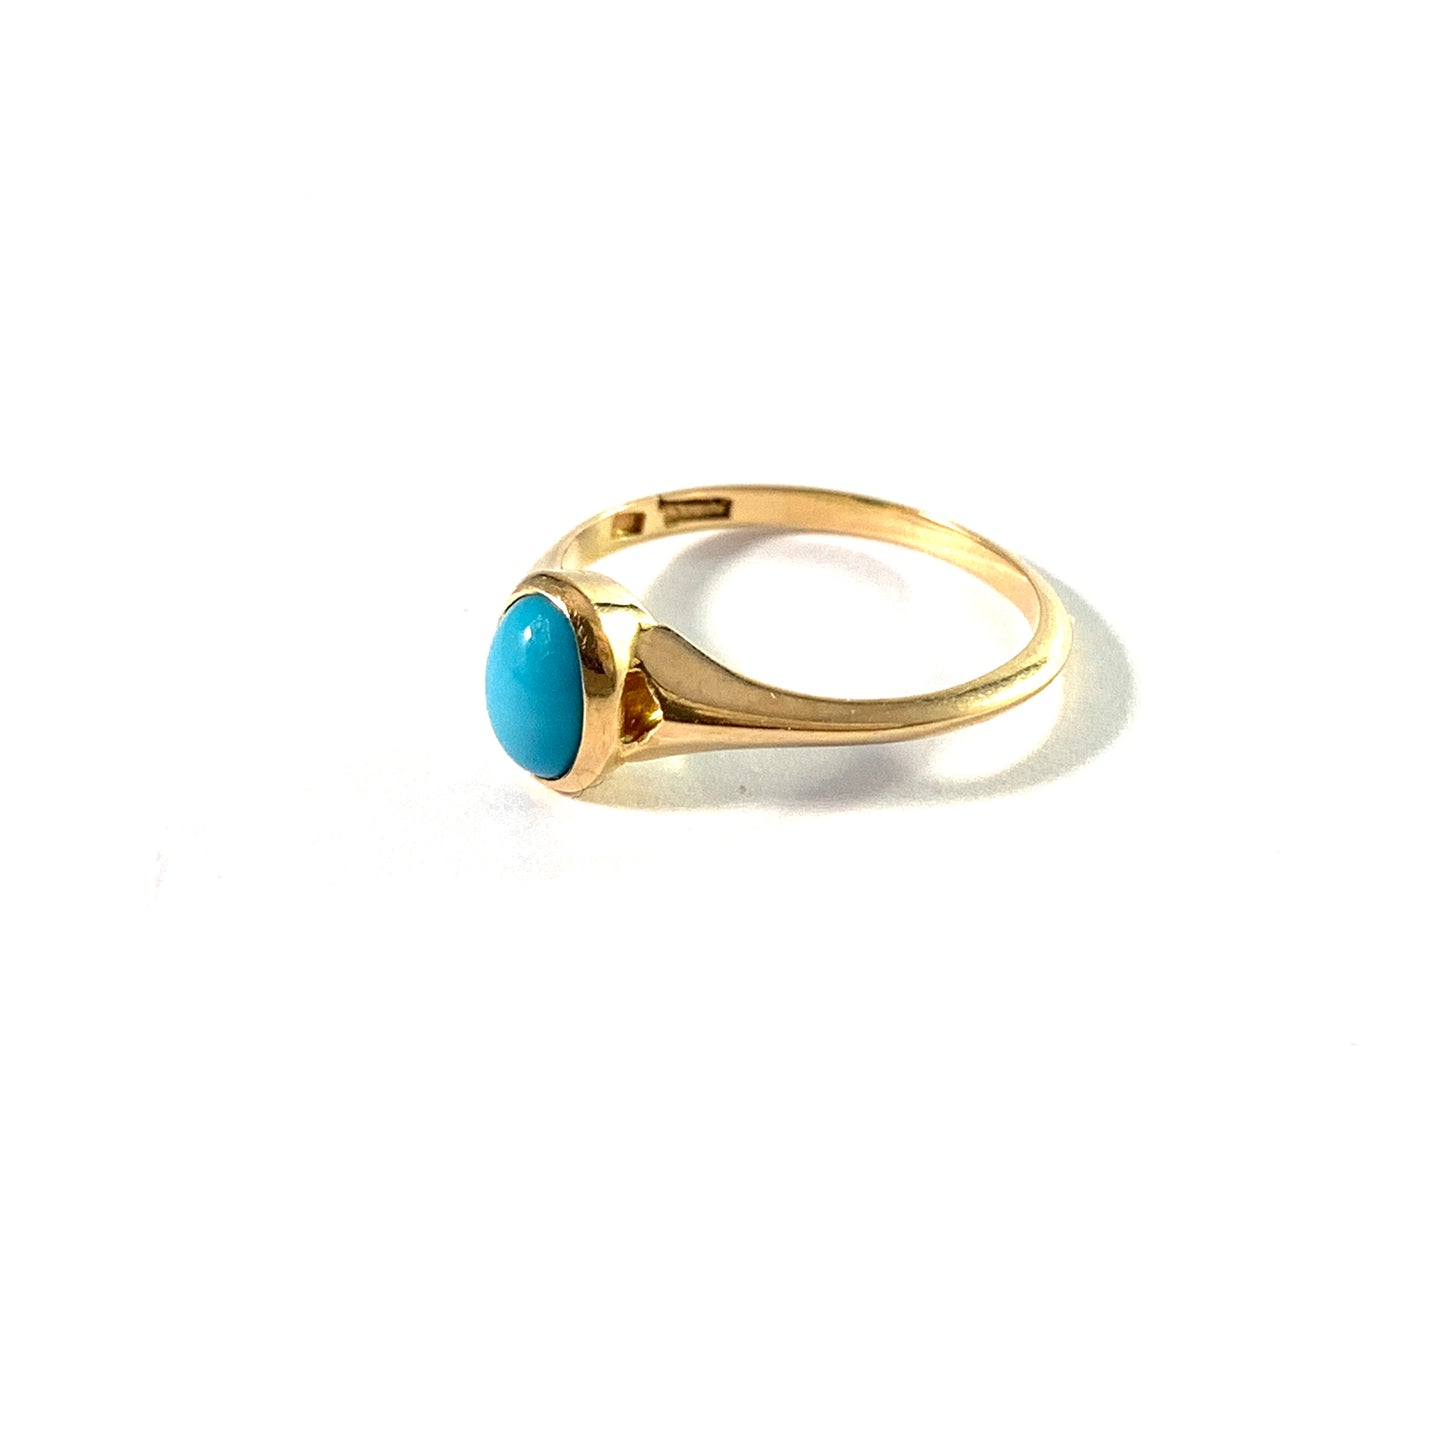 G Dahlgren, Sweden year 1940. Vintage 18k Gold Turquoise Ring.